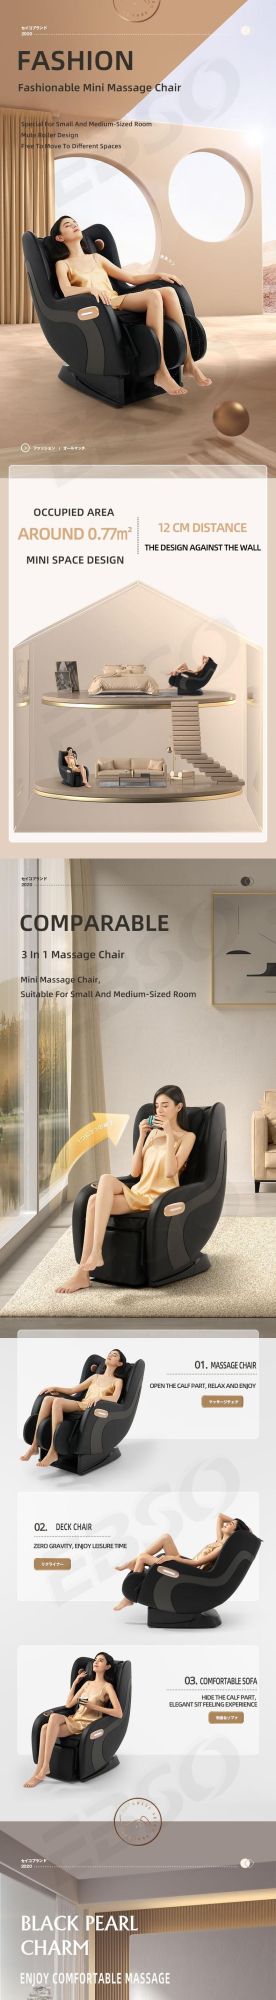 Ksm-Mc1 4D Body Massage Chair for Wheelchair People Shiatsu SL Track 0 Gravity Full Body Airbag Massage Chair